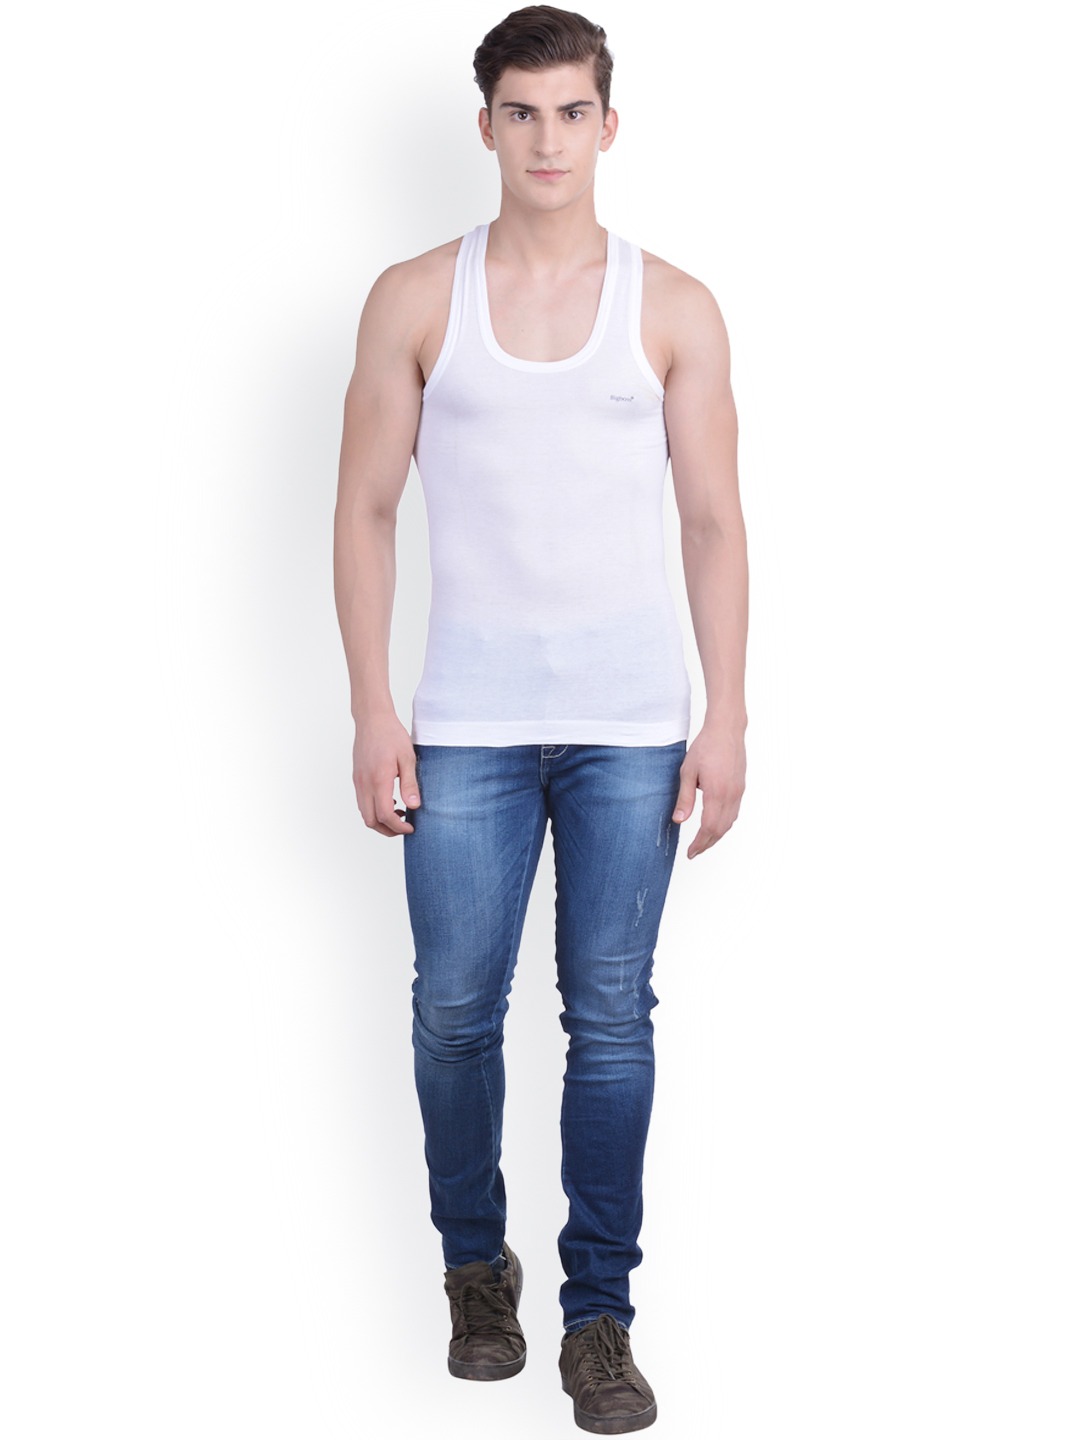 Clothing Innerwear Vests | Dollar Bigboss Pack of 10 White Innerwear Vests MDVE-01-PO10 - TD30037